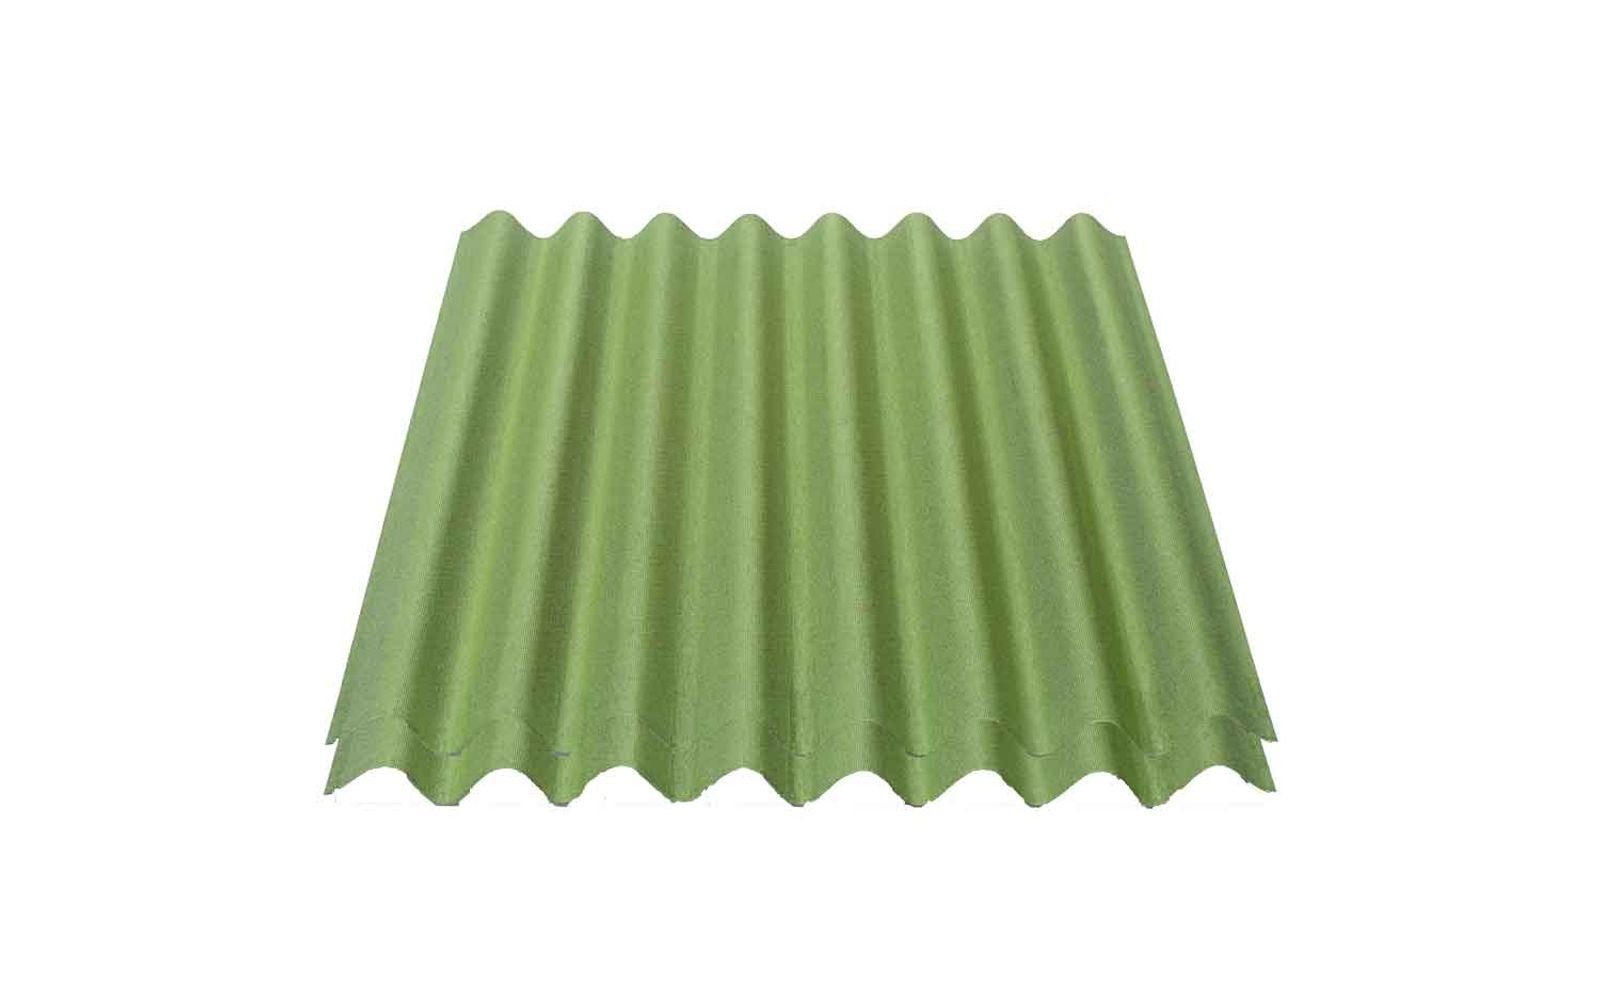 Onduline Dachpappe Onduline Easyline Dachplatte Wandplatte Bitumenwellplatten Wellplatte 2x0,76m² - grün, wellig, 1.52 m² pro Paket, (2-St)